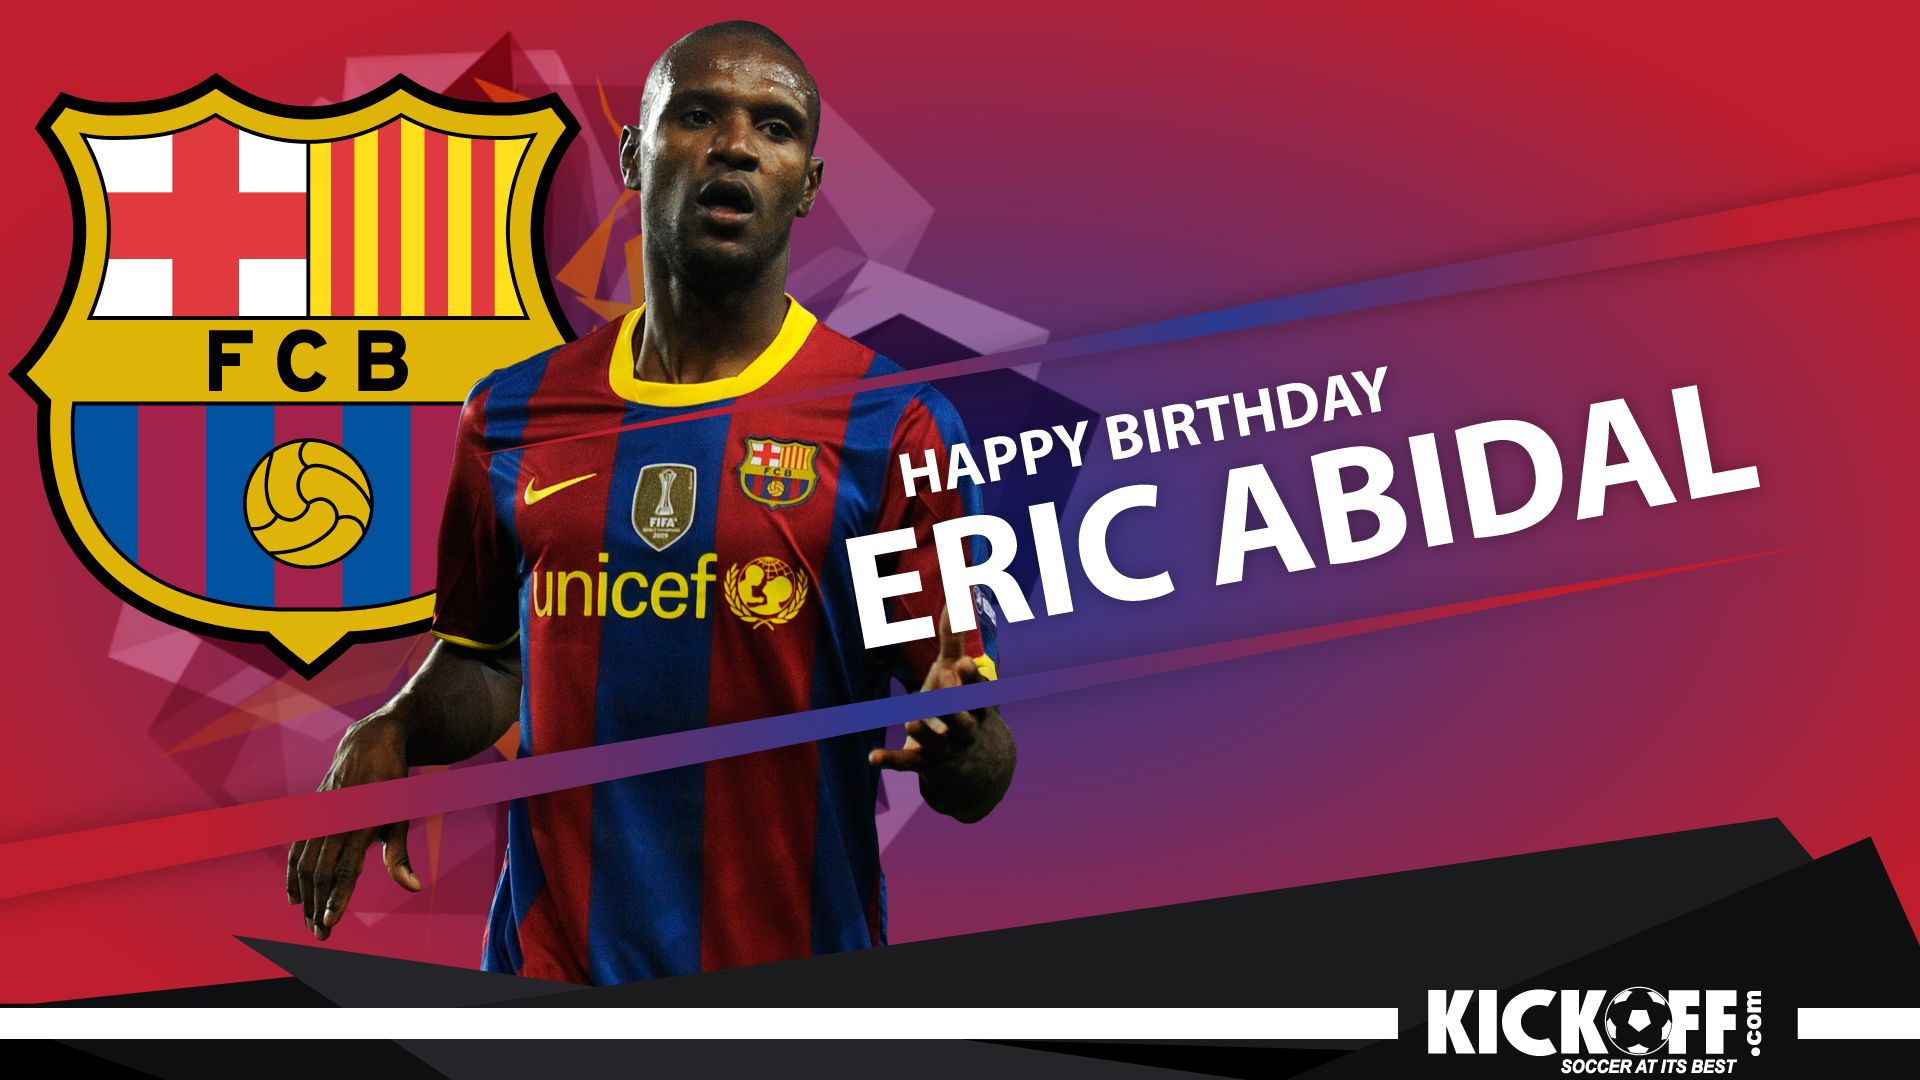 Happy Birthday to Barcelona legend Eric Abidal!
19 trophies Beat Cancer  Champion 